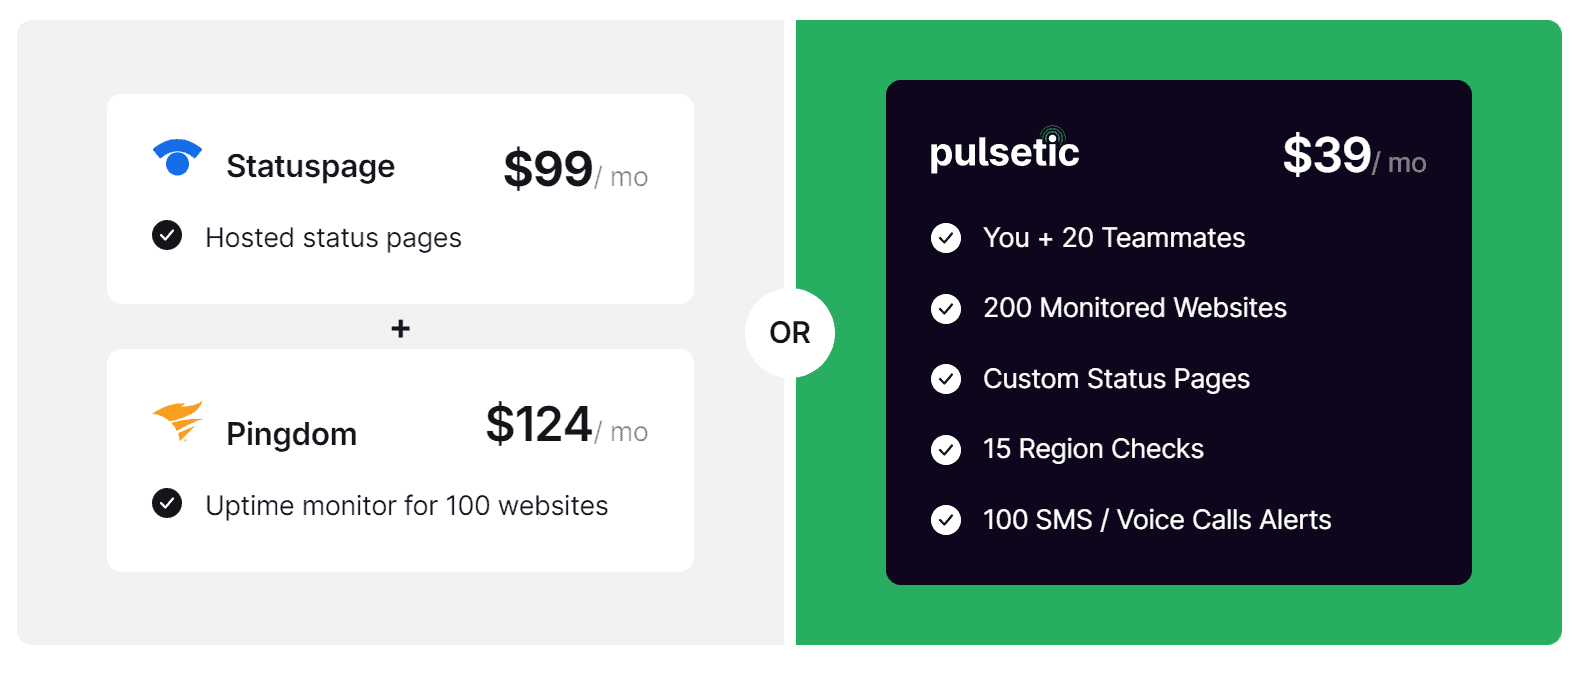 pulsetic regular pricing